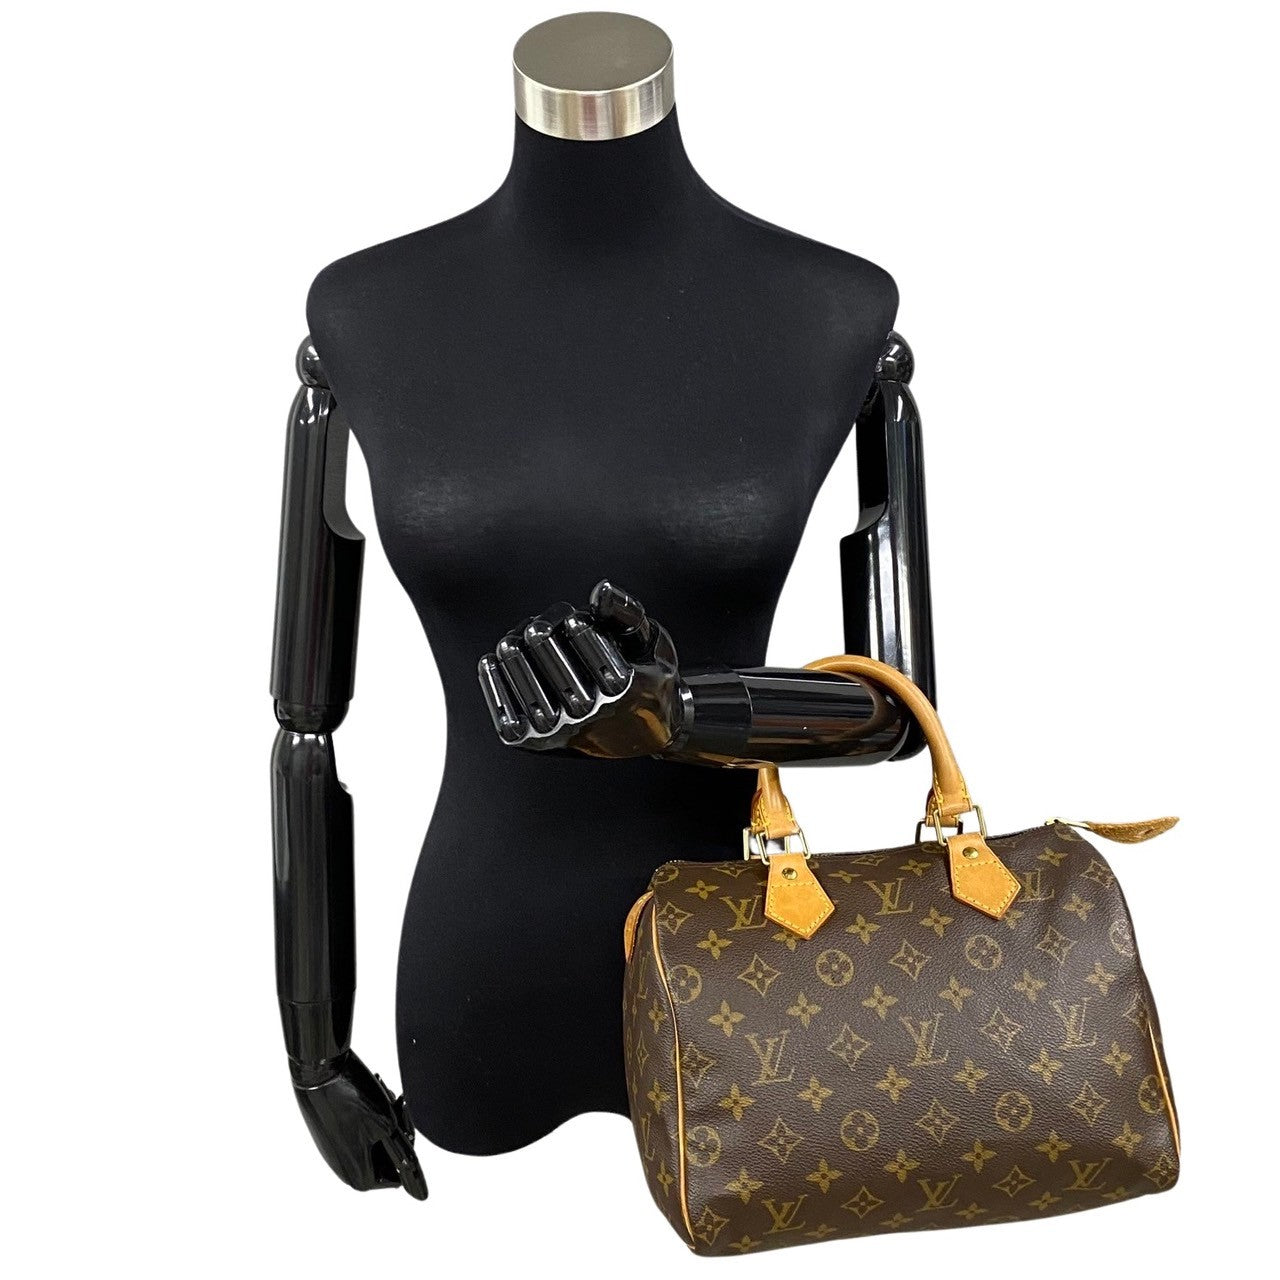 Louis Vuitton Speedy 25 Canvas Handbag M41528 in Good condition